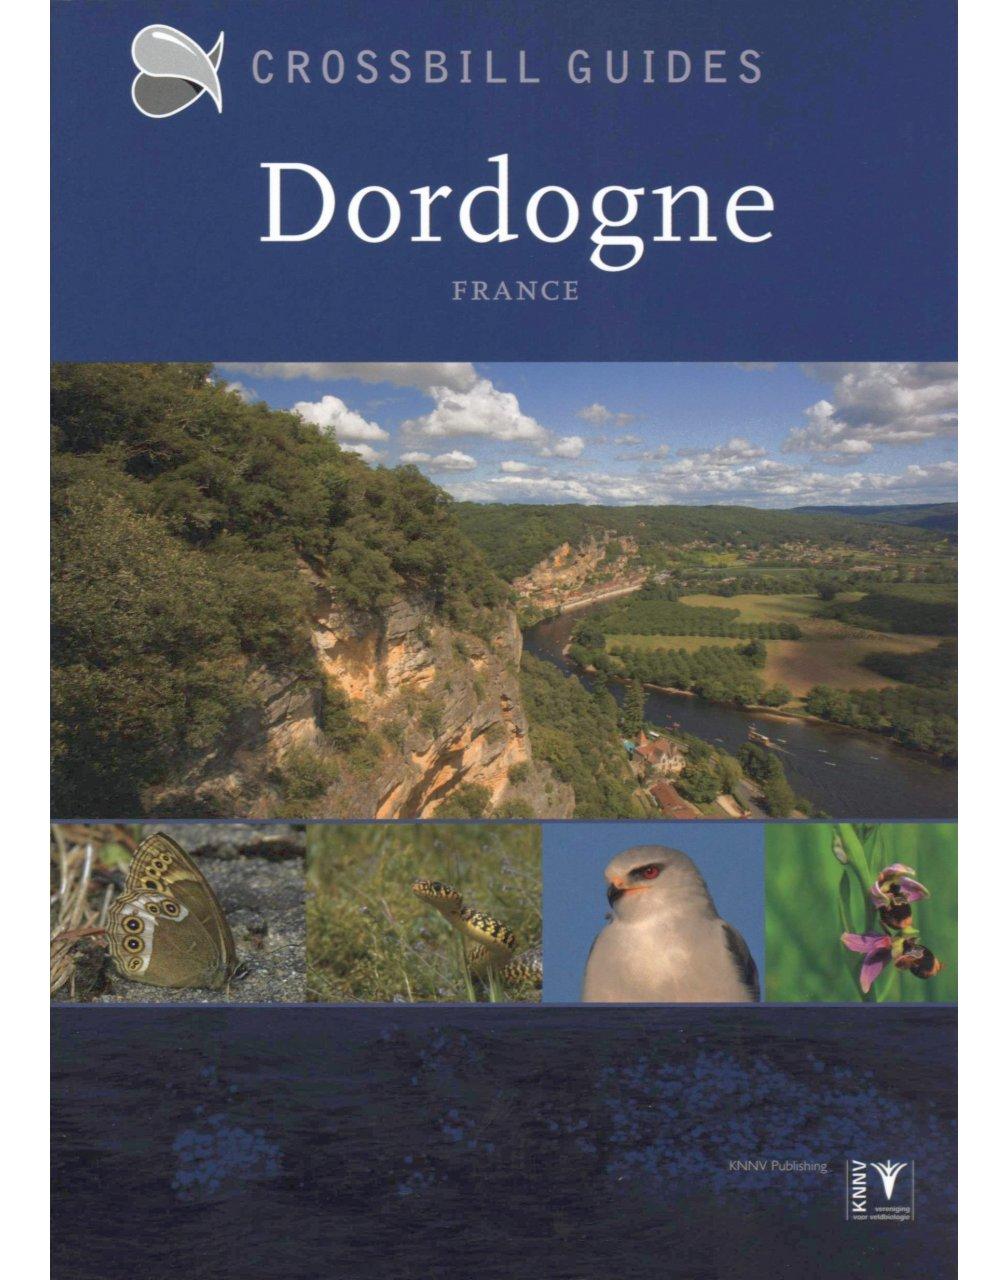 Crossbill Guides: Dordogne